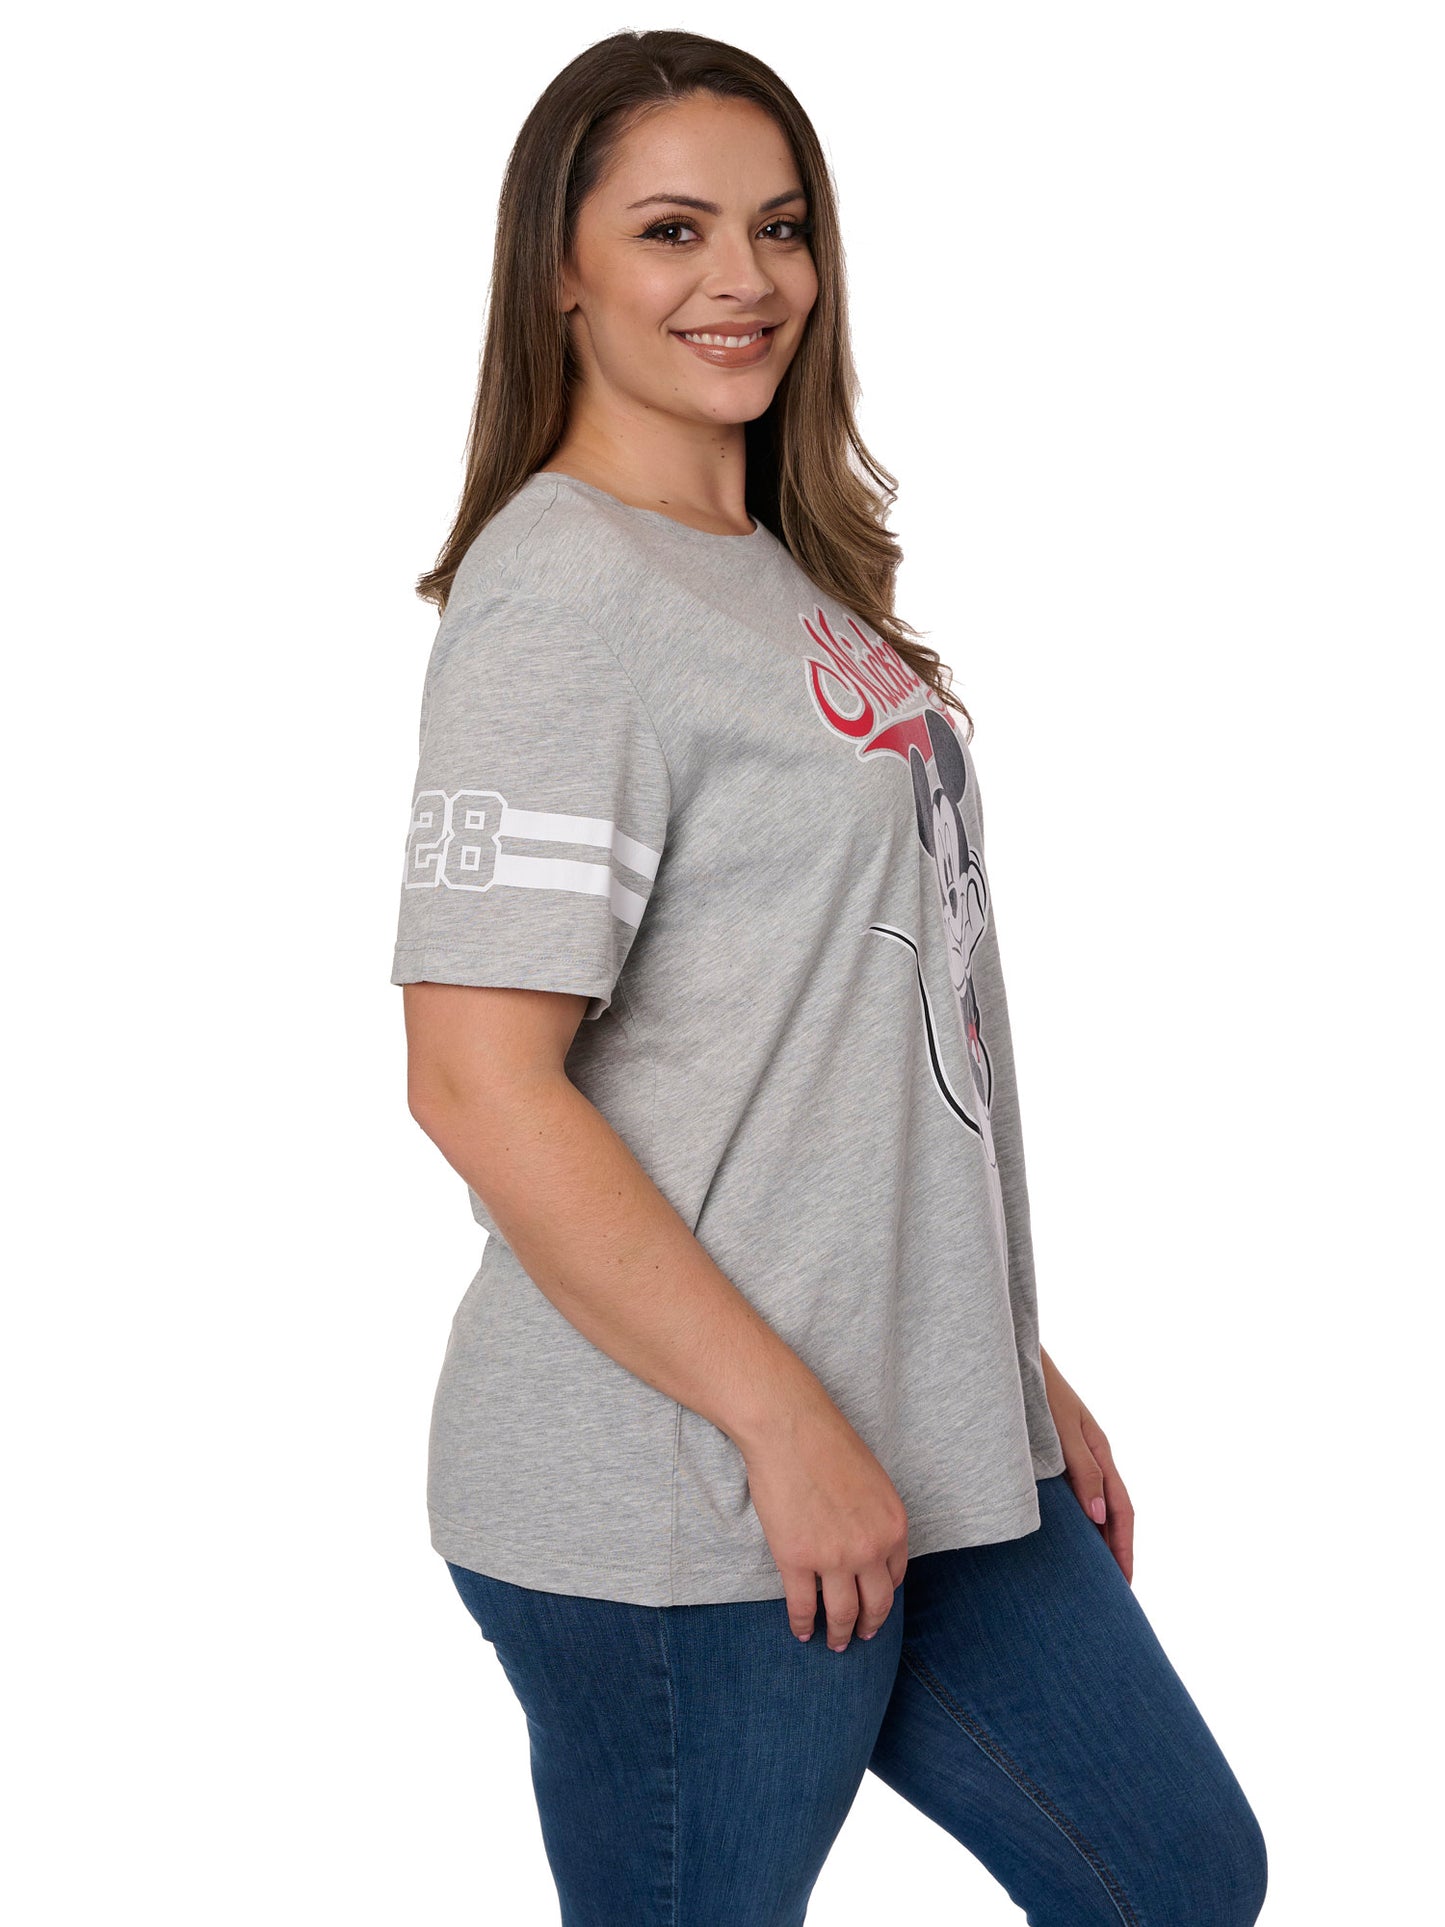 Women's Plus Size Mickey Mouse T-Shirt Striped Sleeve Varsity Disney Gray